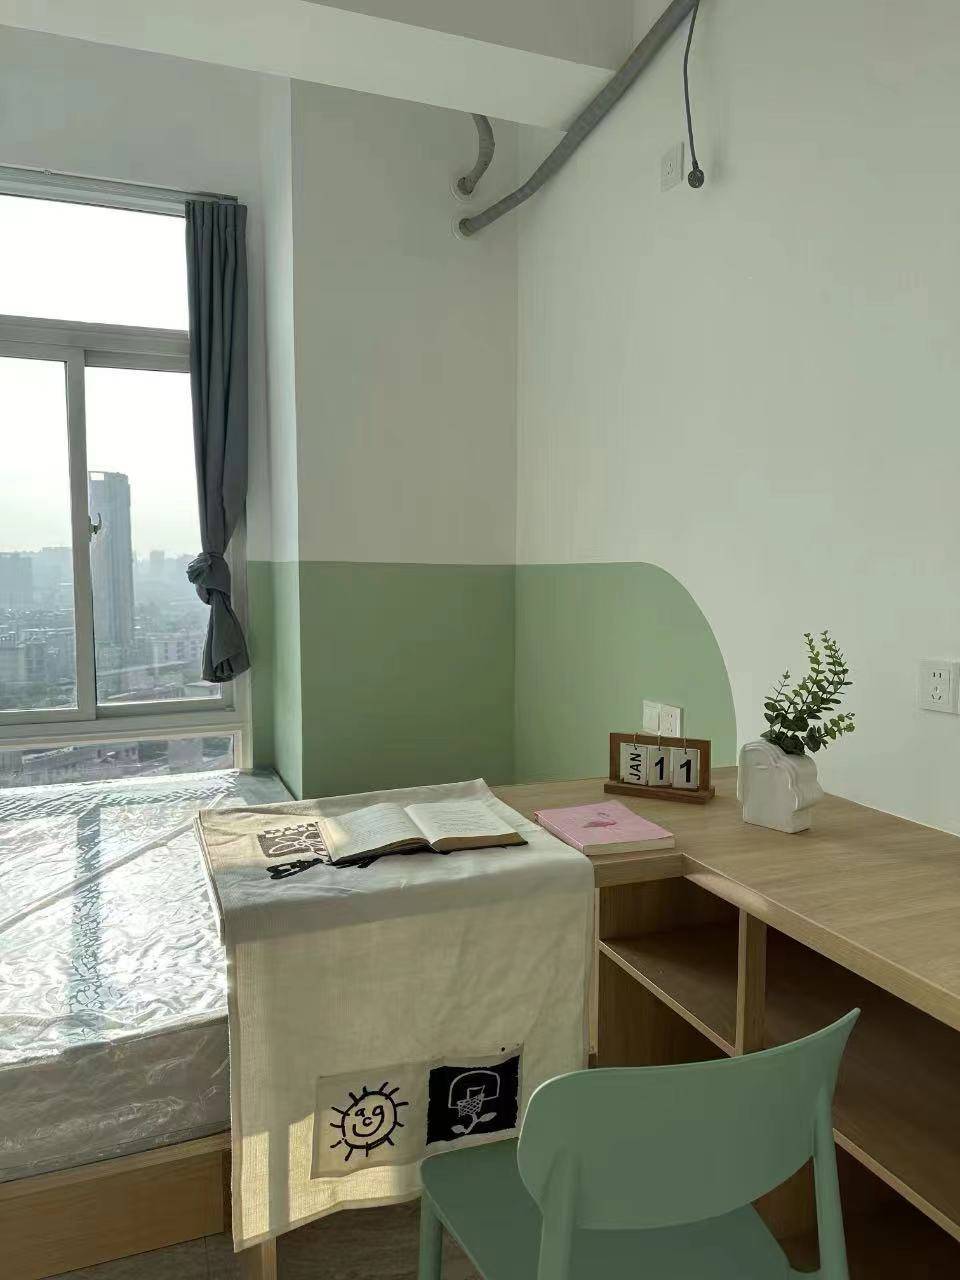 Changsha-Yuhua-Cozy Home,Clean&Comfy,No Gender Limit,Hustle & Bustle,“Friends”,Chilled,LGBTQ Friendly